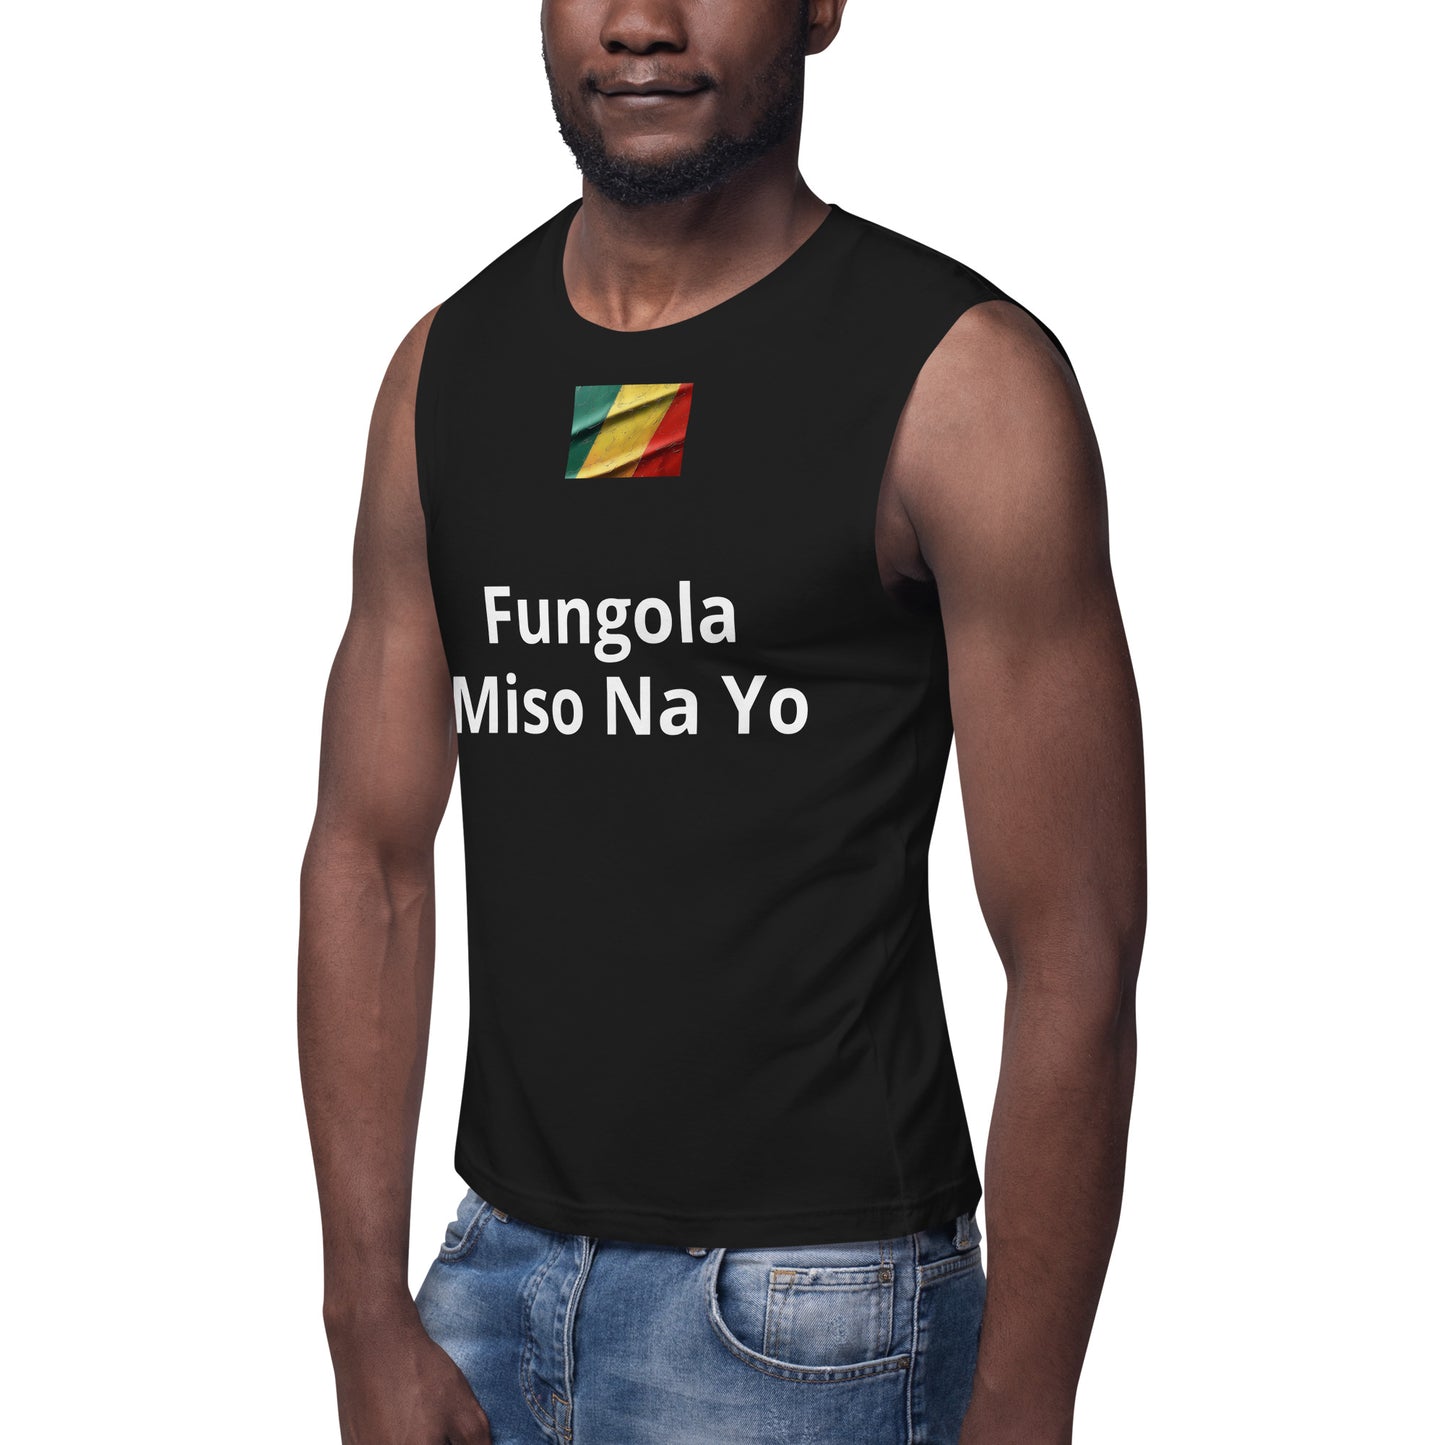 Title: "Congo Crisis Awareness Muscle Shirt - 'Fungola Miso Na Yo' Print"